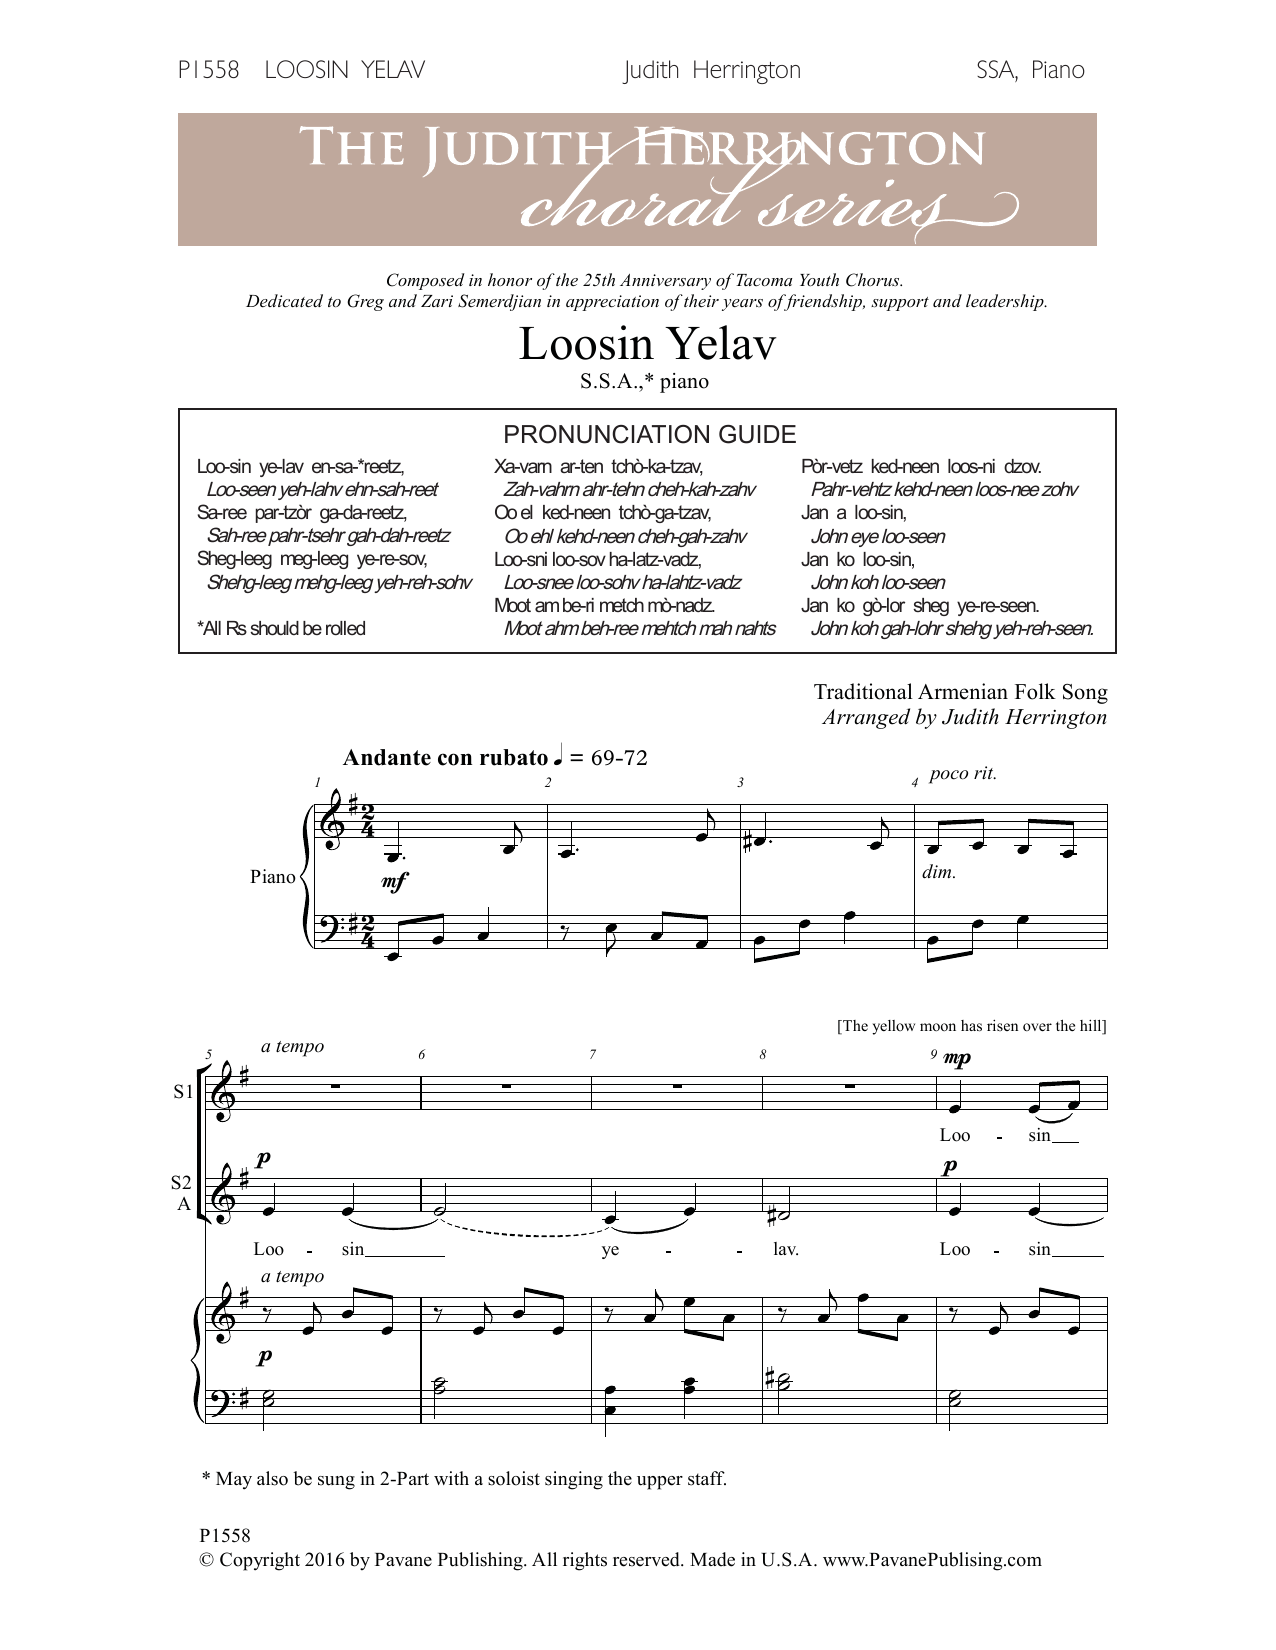 Download Judith Herrington Loosin Yelav Sheet Music and learn how to play SSA Choir PDF digital score in minutes